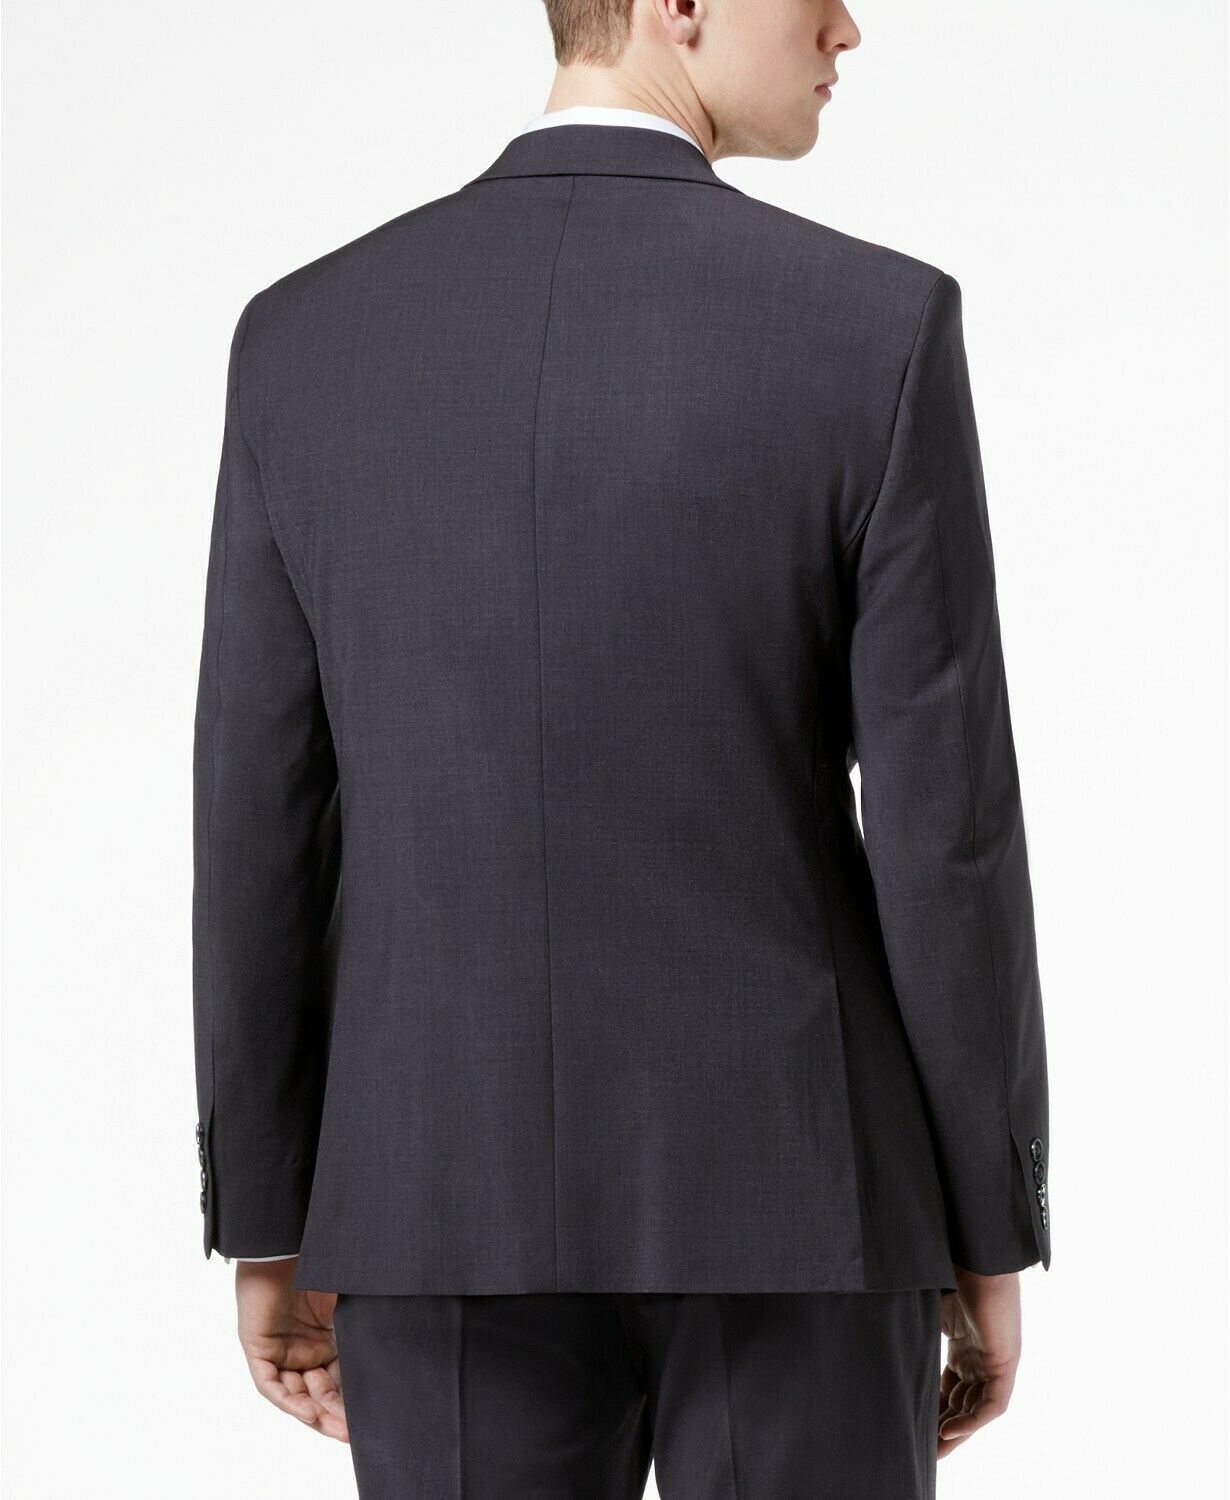 Calvin Klein Mens X-Fit Slim Fit Suit Jacket 42S Charcoal Grey / Two Button